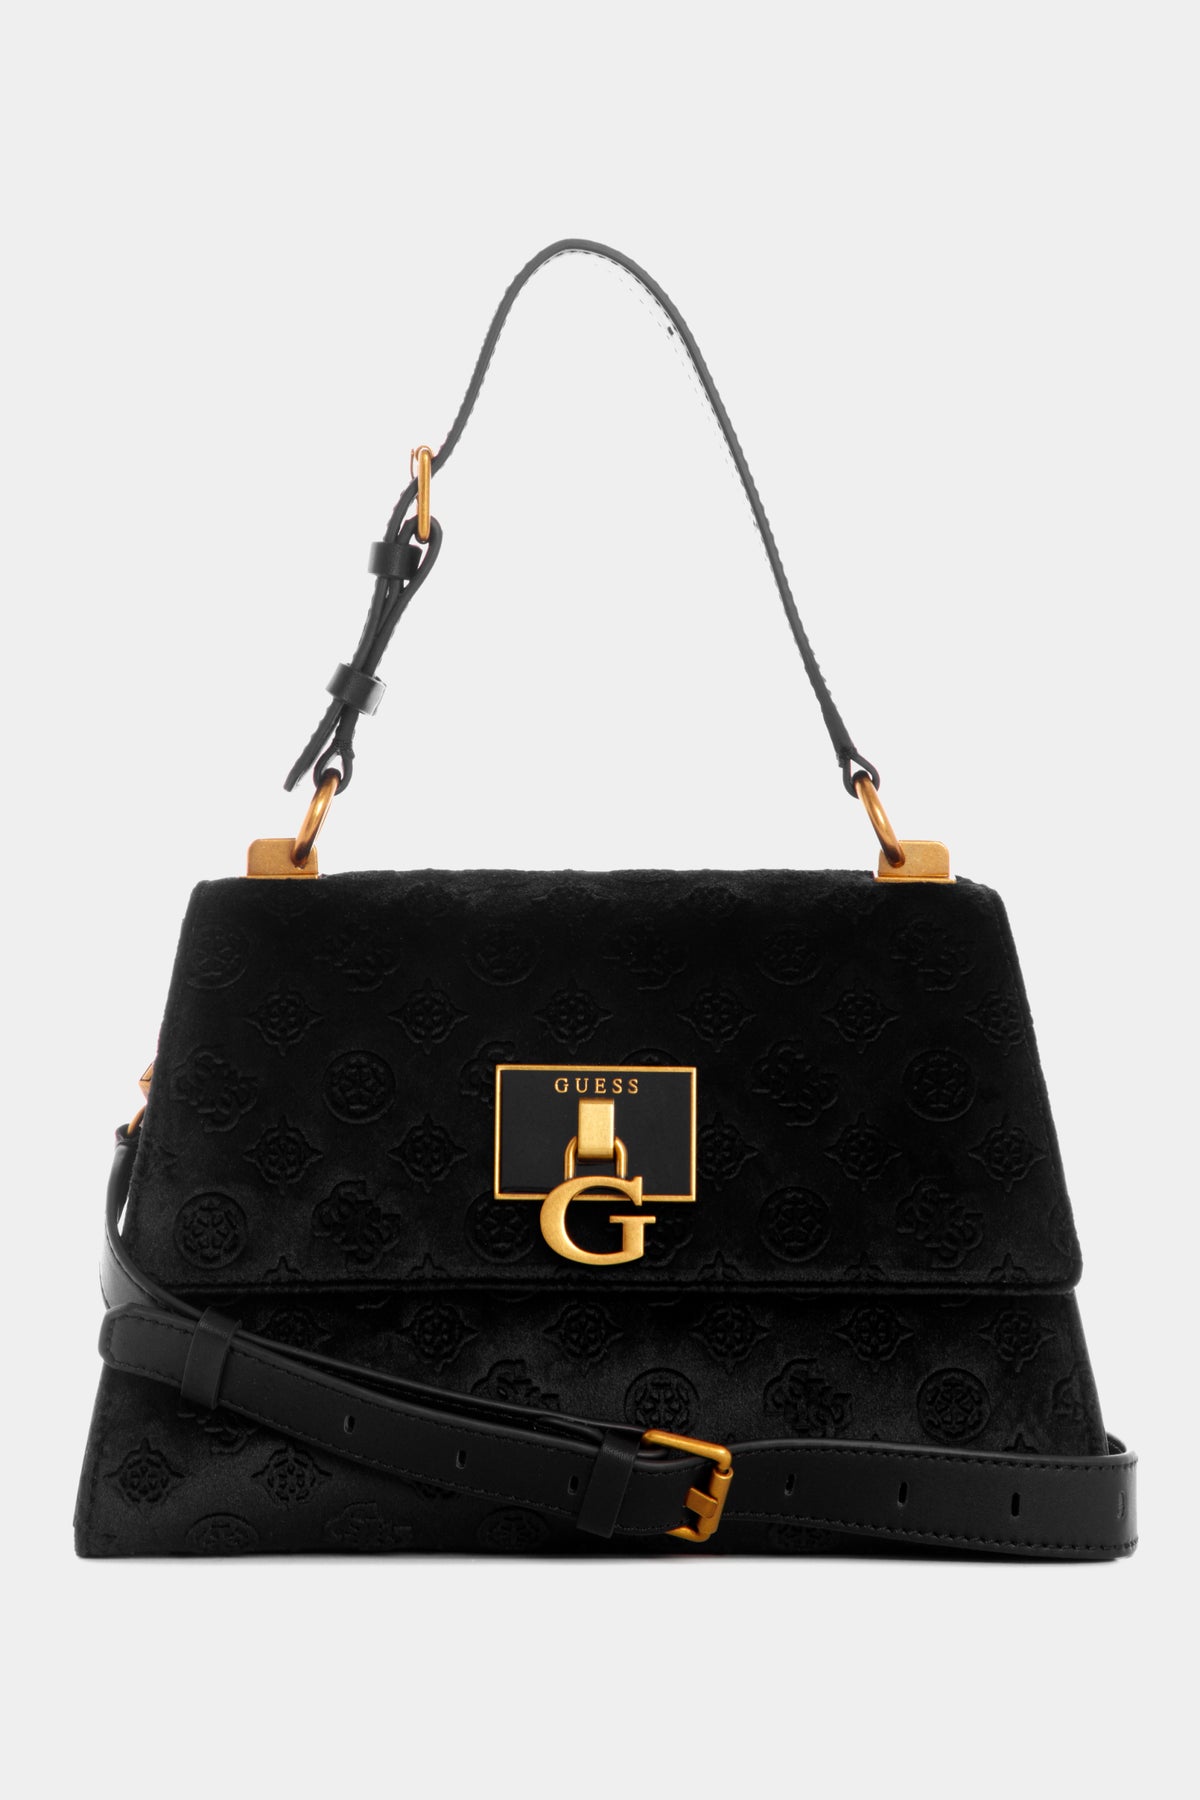 GUESS Stephi Top-Handle Flap Bag